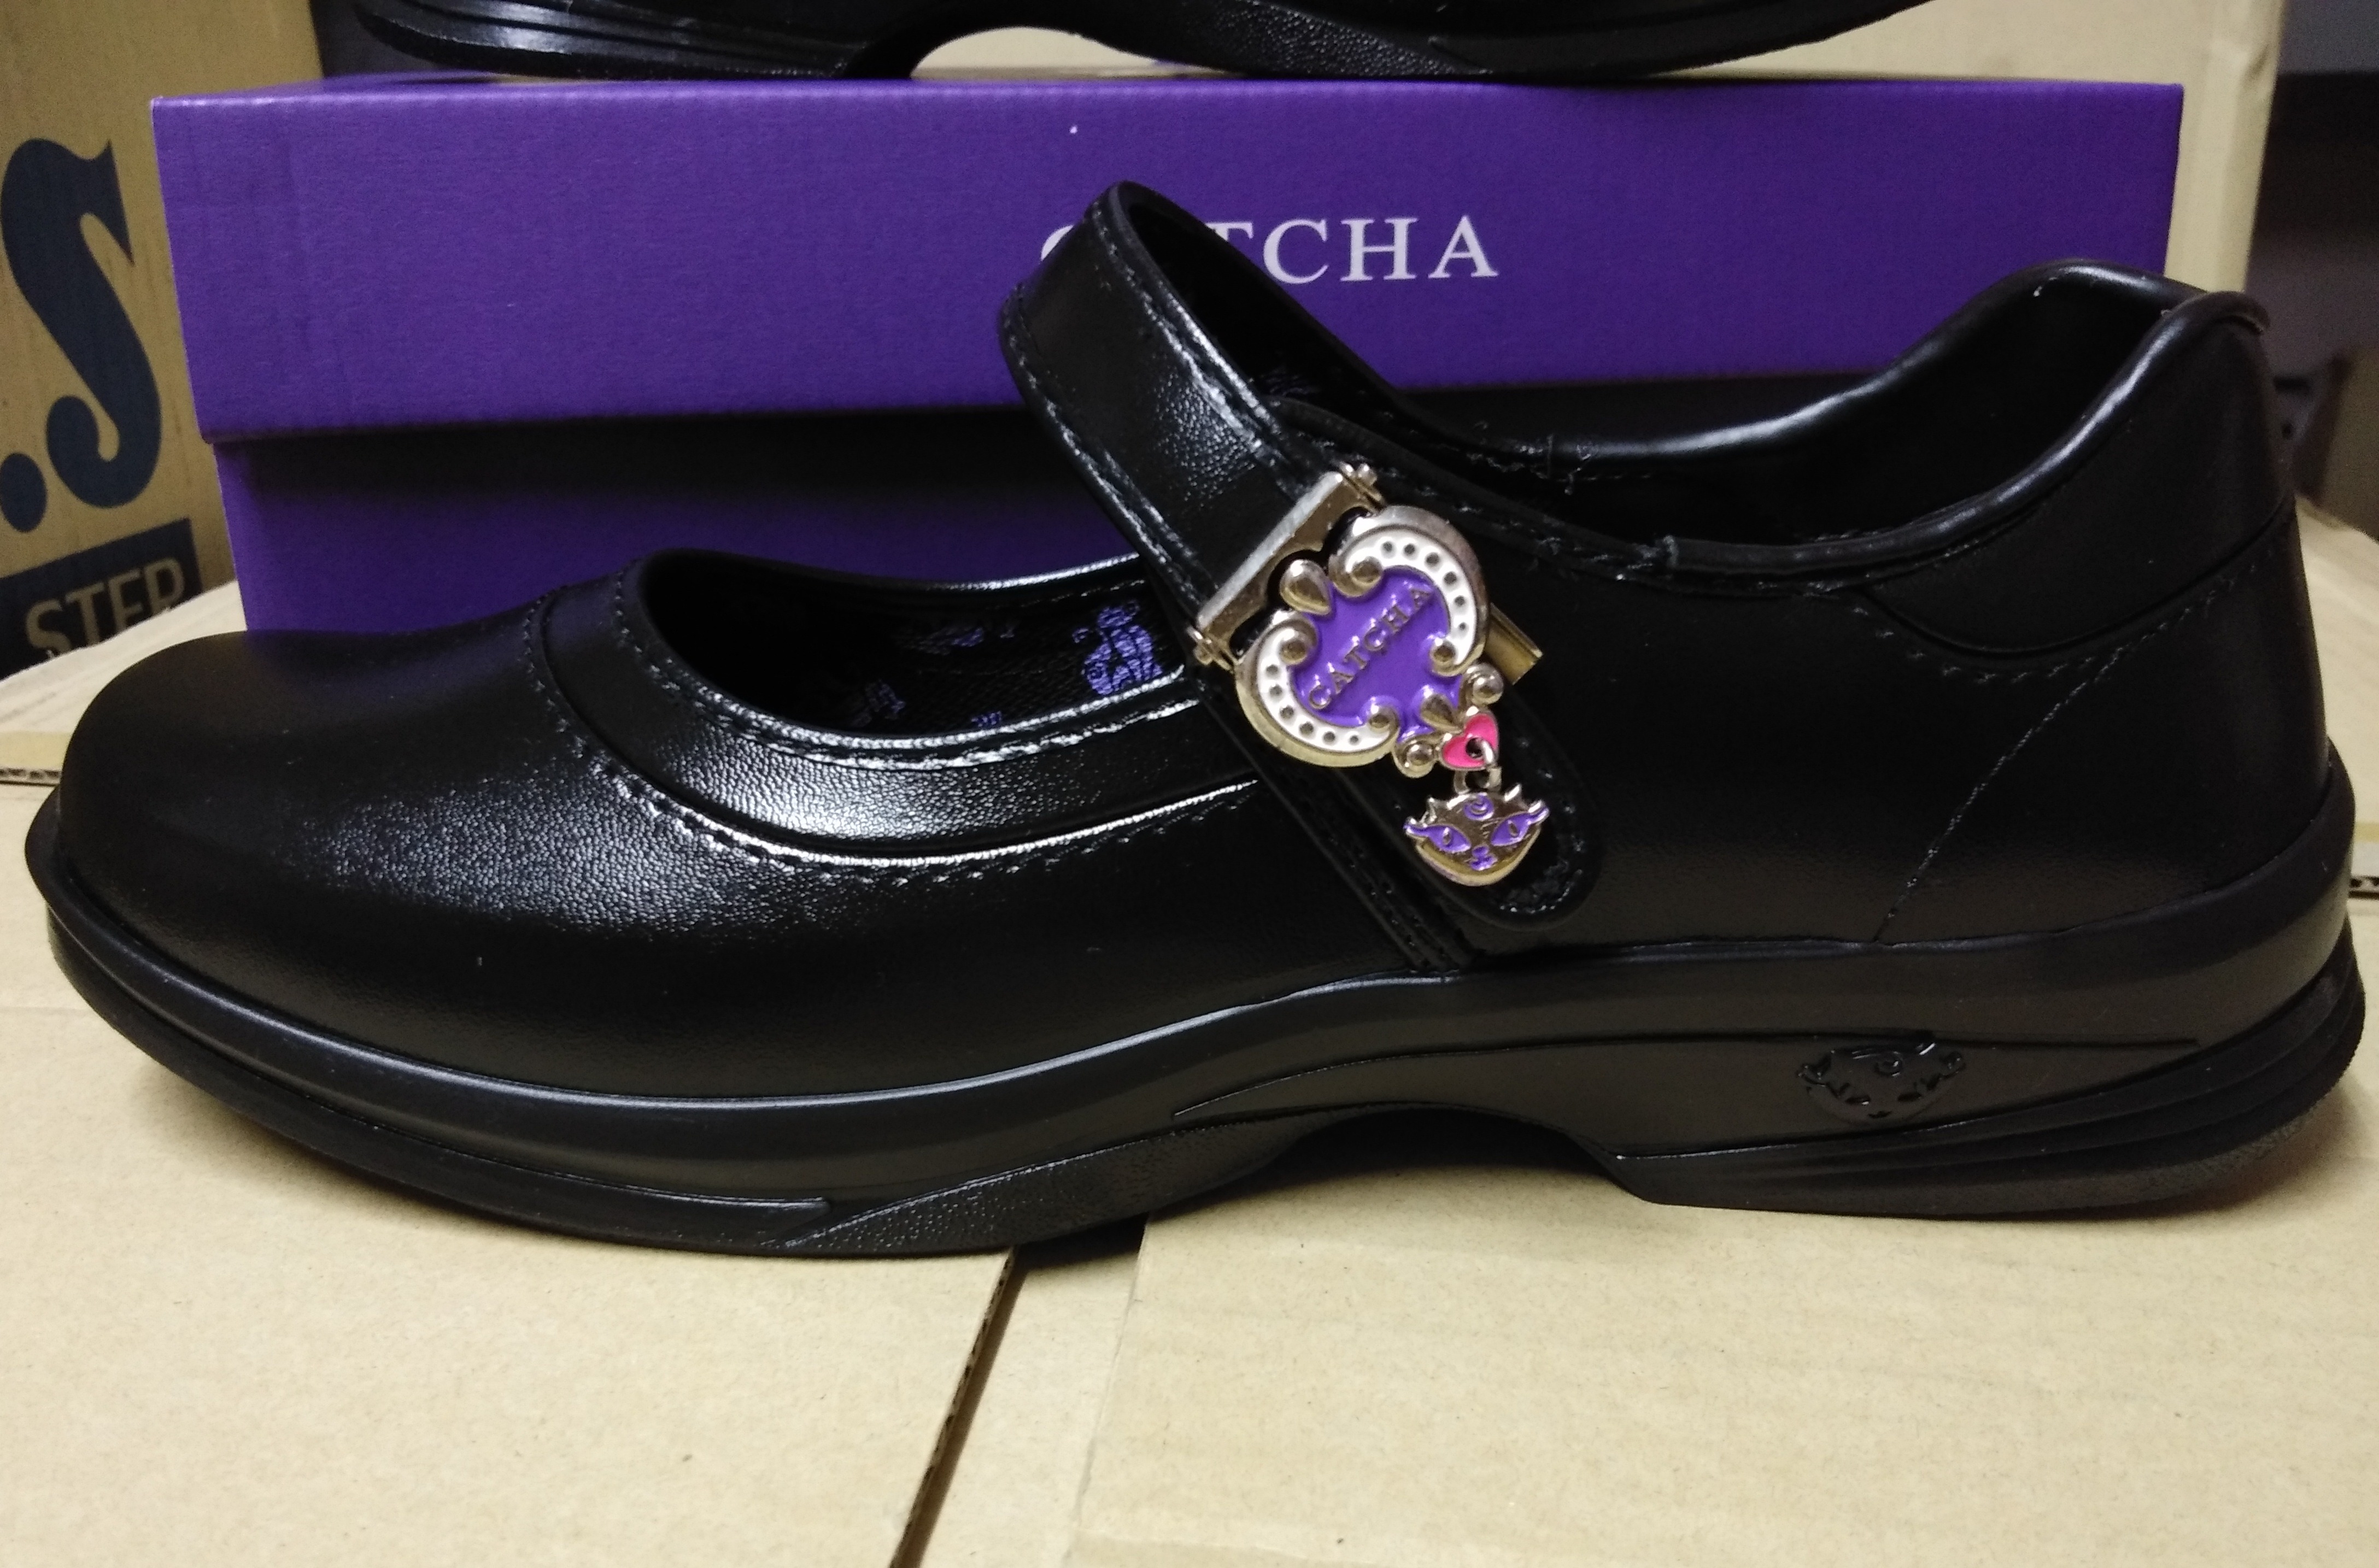 SCPOutlet รองเท้านักเรียน เด็กผู้หญิง Catcha CX03B รุ่นใหม่ล่าสุด ของแท้ มีป้าย มีกล่องสวยงาม พร้อมส่งทุกไซส์ มีขนาด 30 - 42 ลดราคาถูกกว่าห้าง